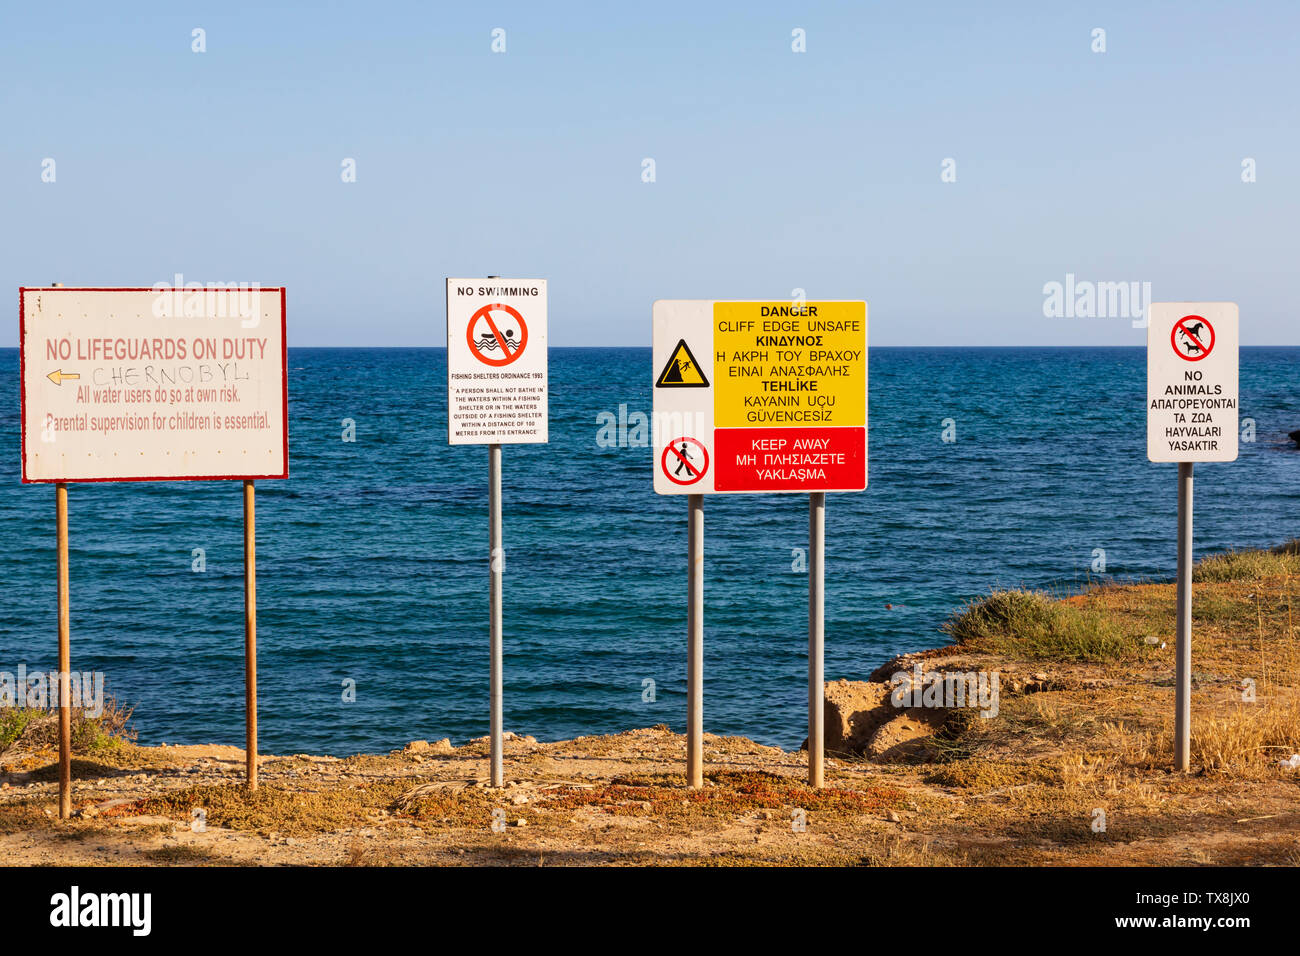 Health and safety warning signs, Xylotymbou fishing shelter, Dhekelia, Larnaca, Cyprus. June 2019 Stock Photo